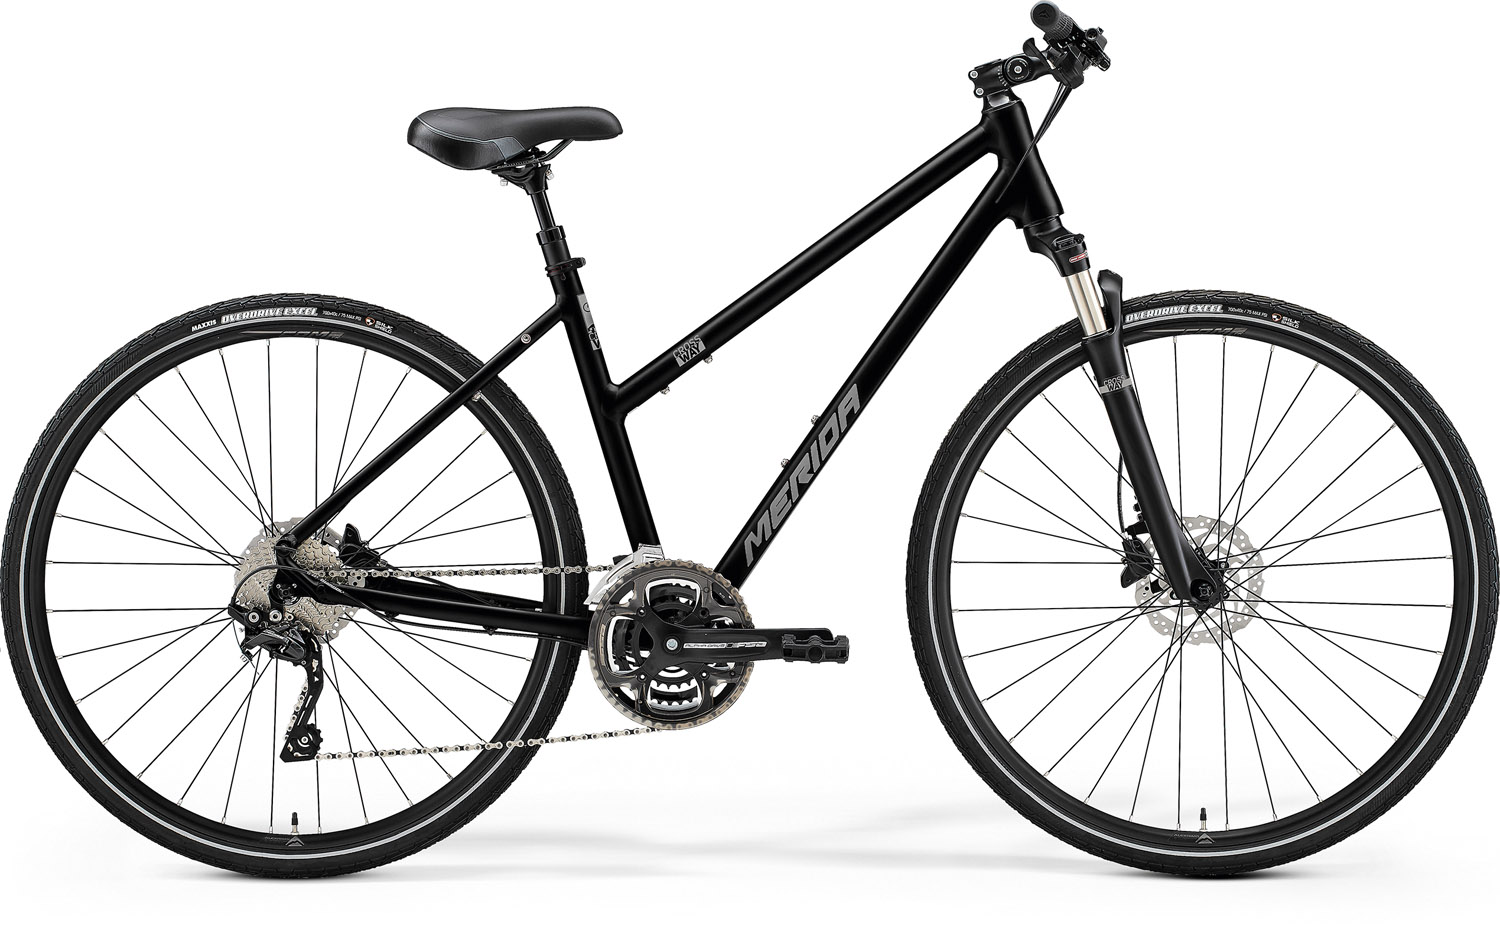 Bicicleta de trekking pentru femei Merida Crossway 300 Negru 2021